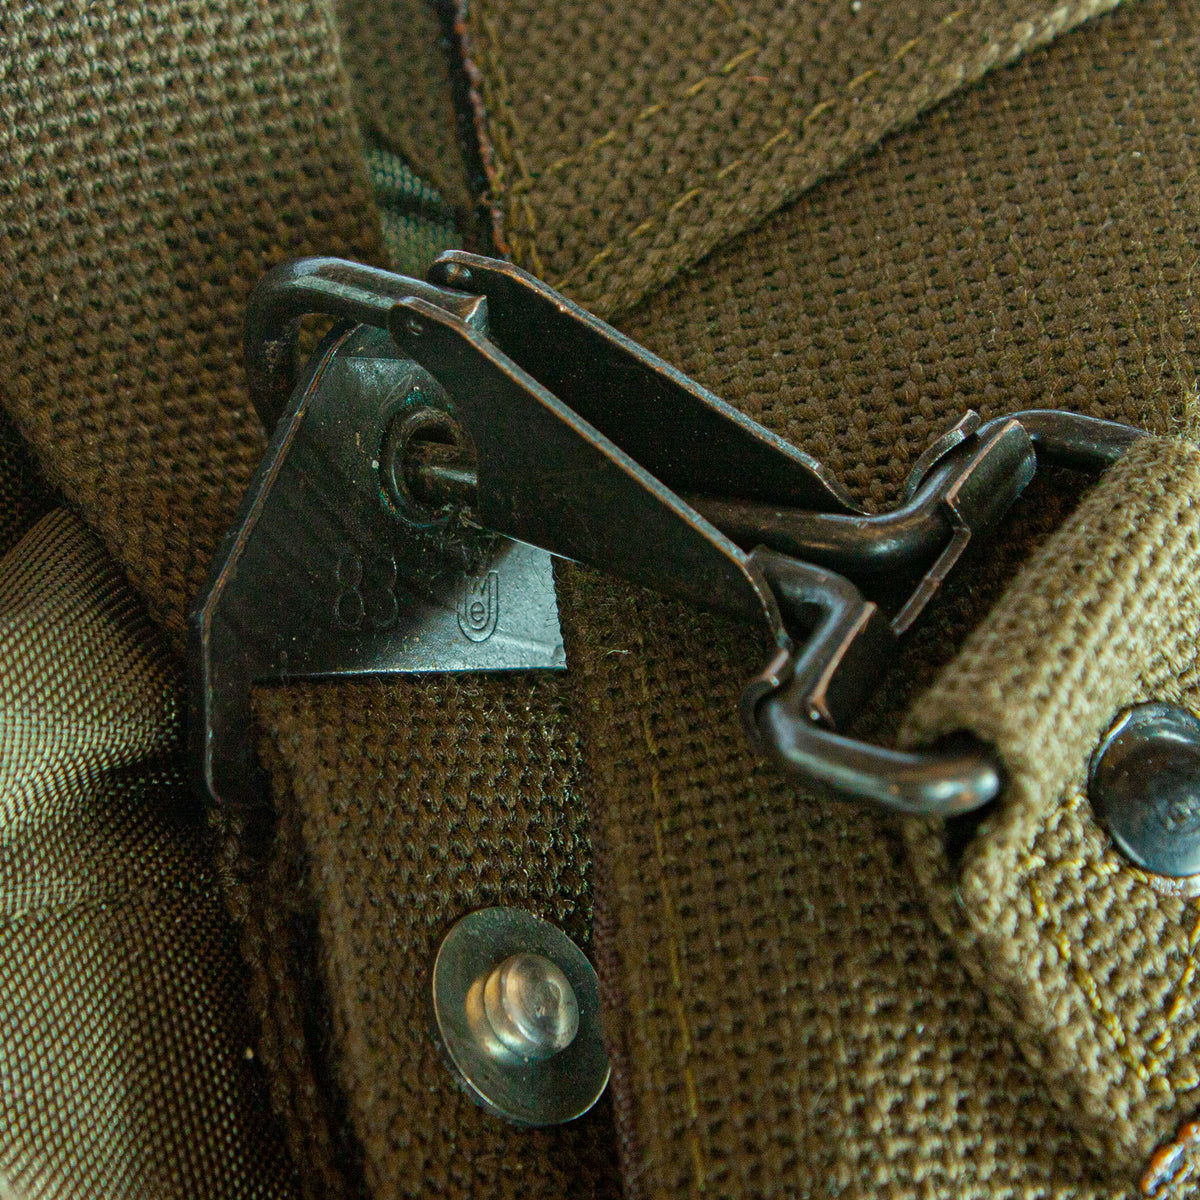 Closeup of Austrian Military A.L.I.C.E. Type Rucksack buckle clasp.